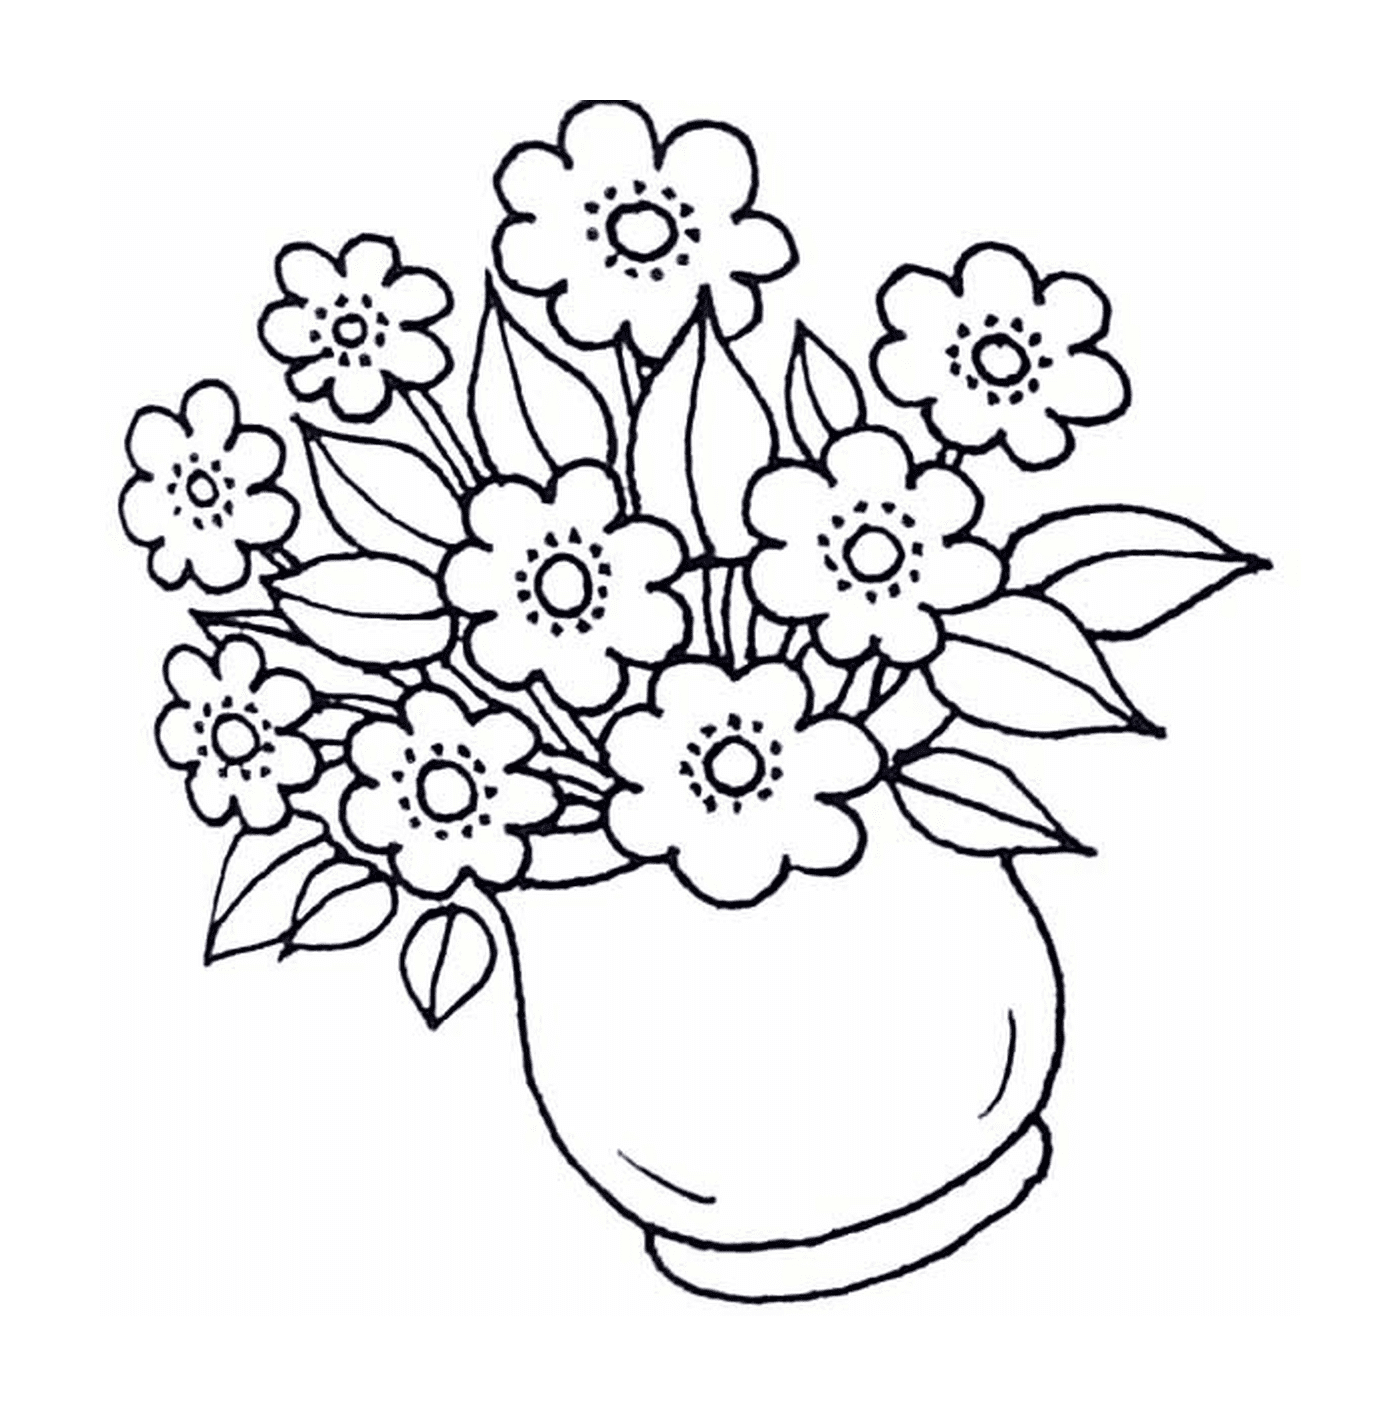  Frühlingsblumen, elegante Vase 